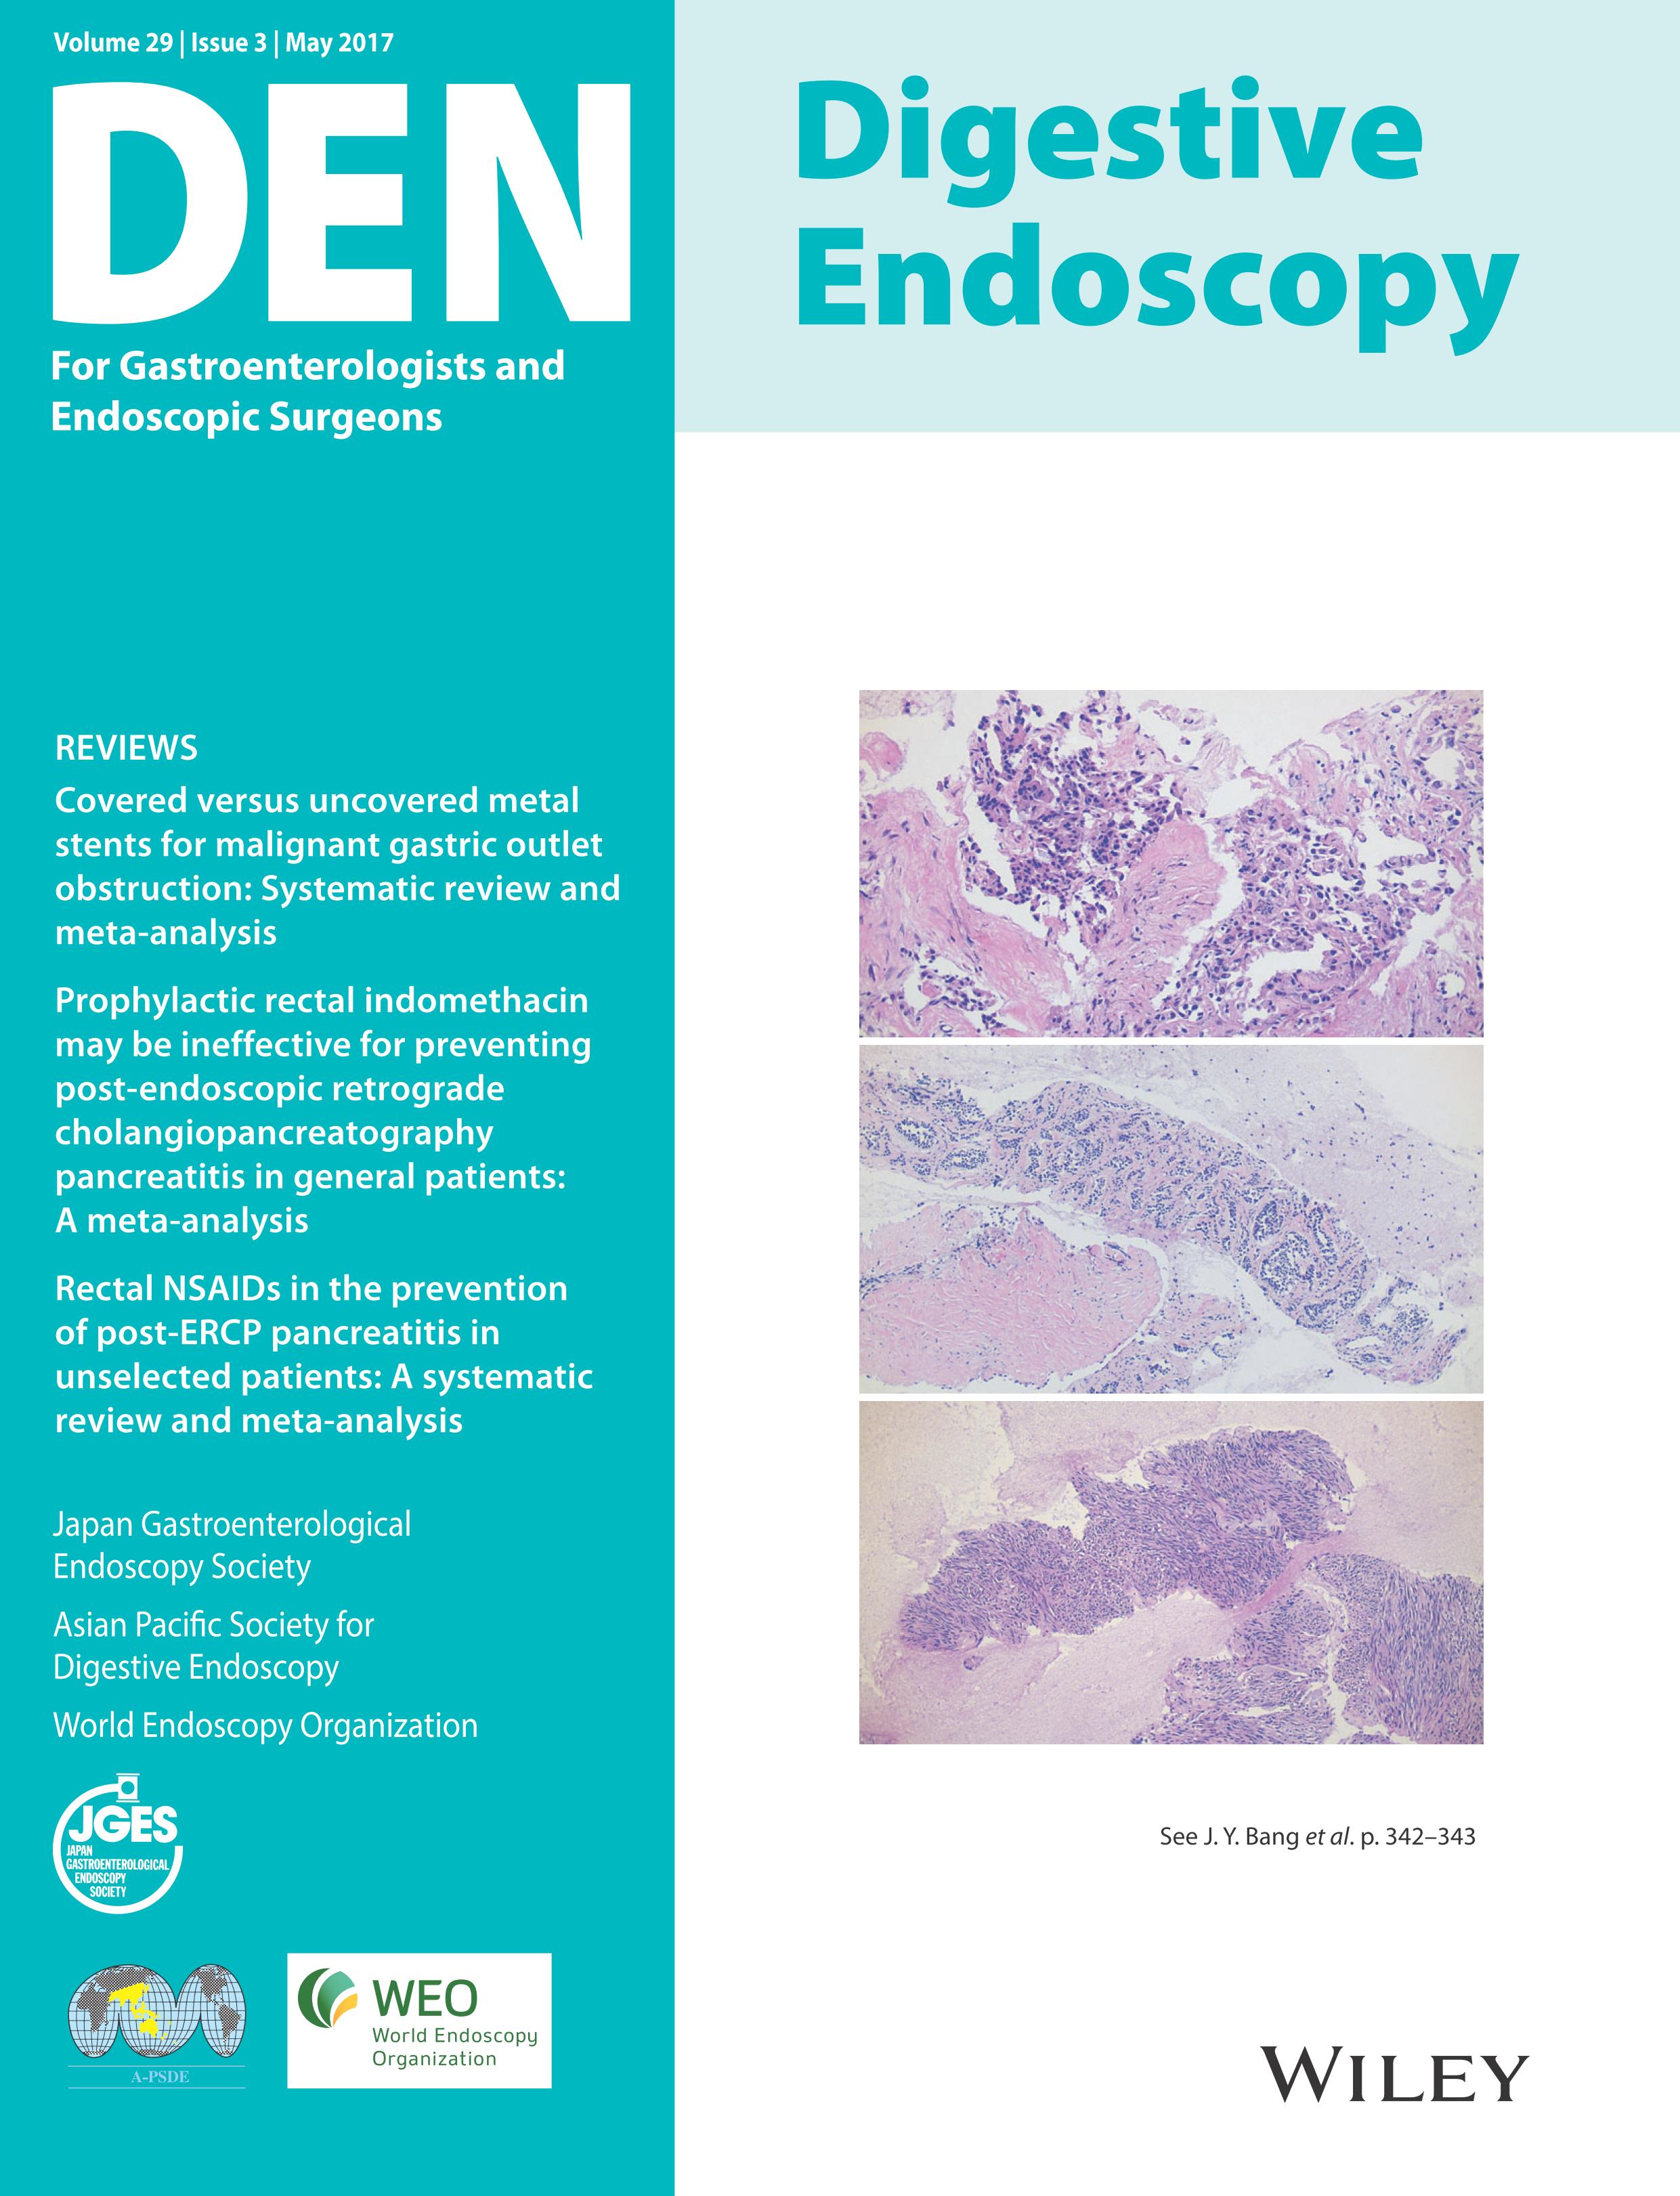 Digestive Endoscopy Vol29-3